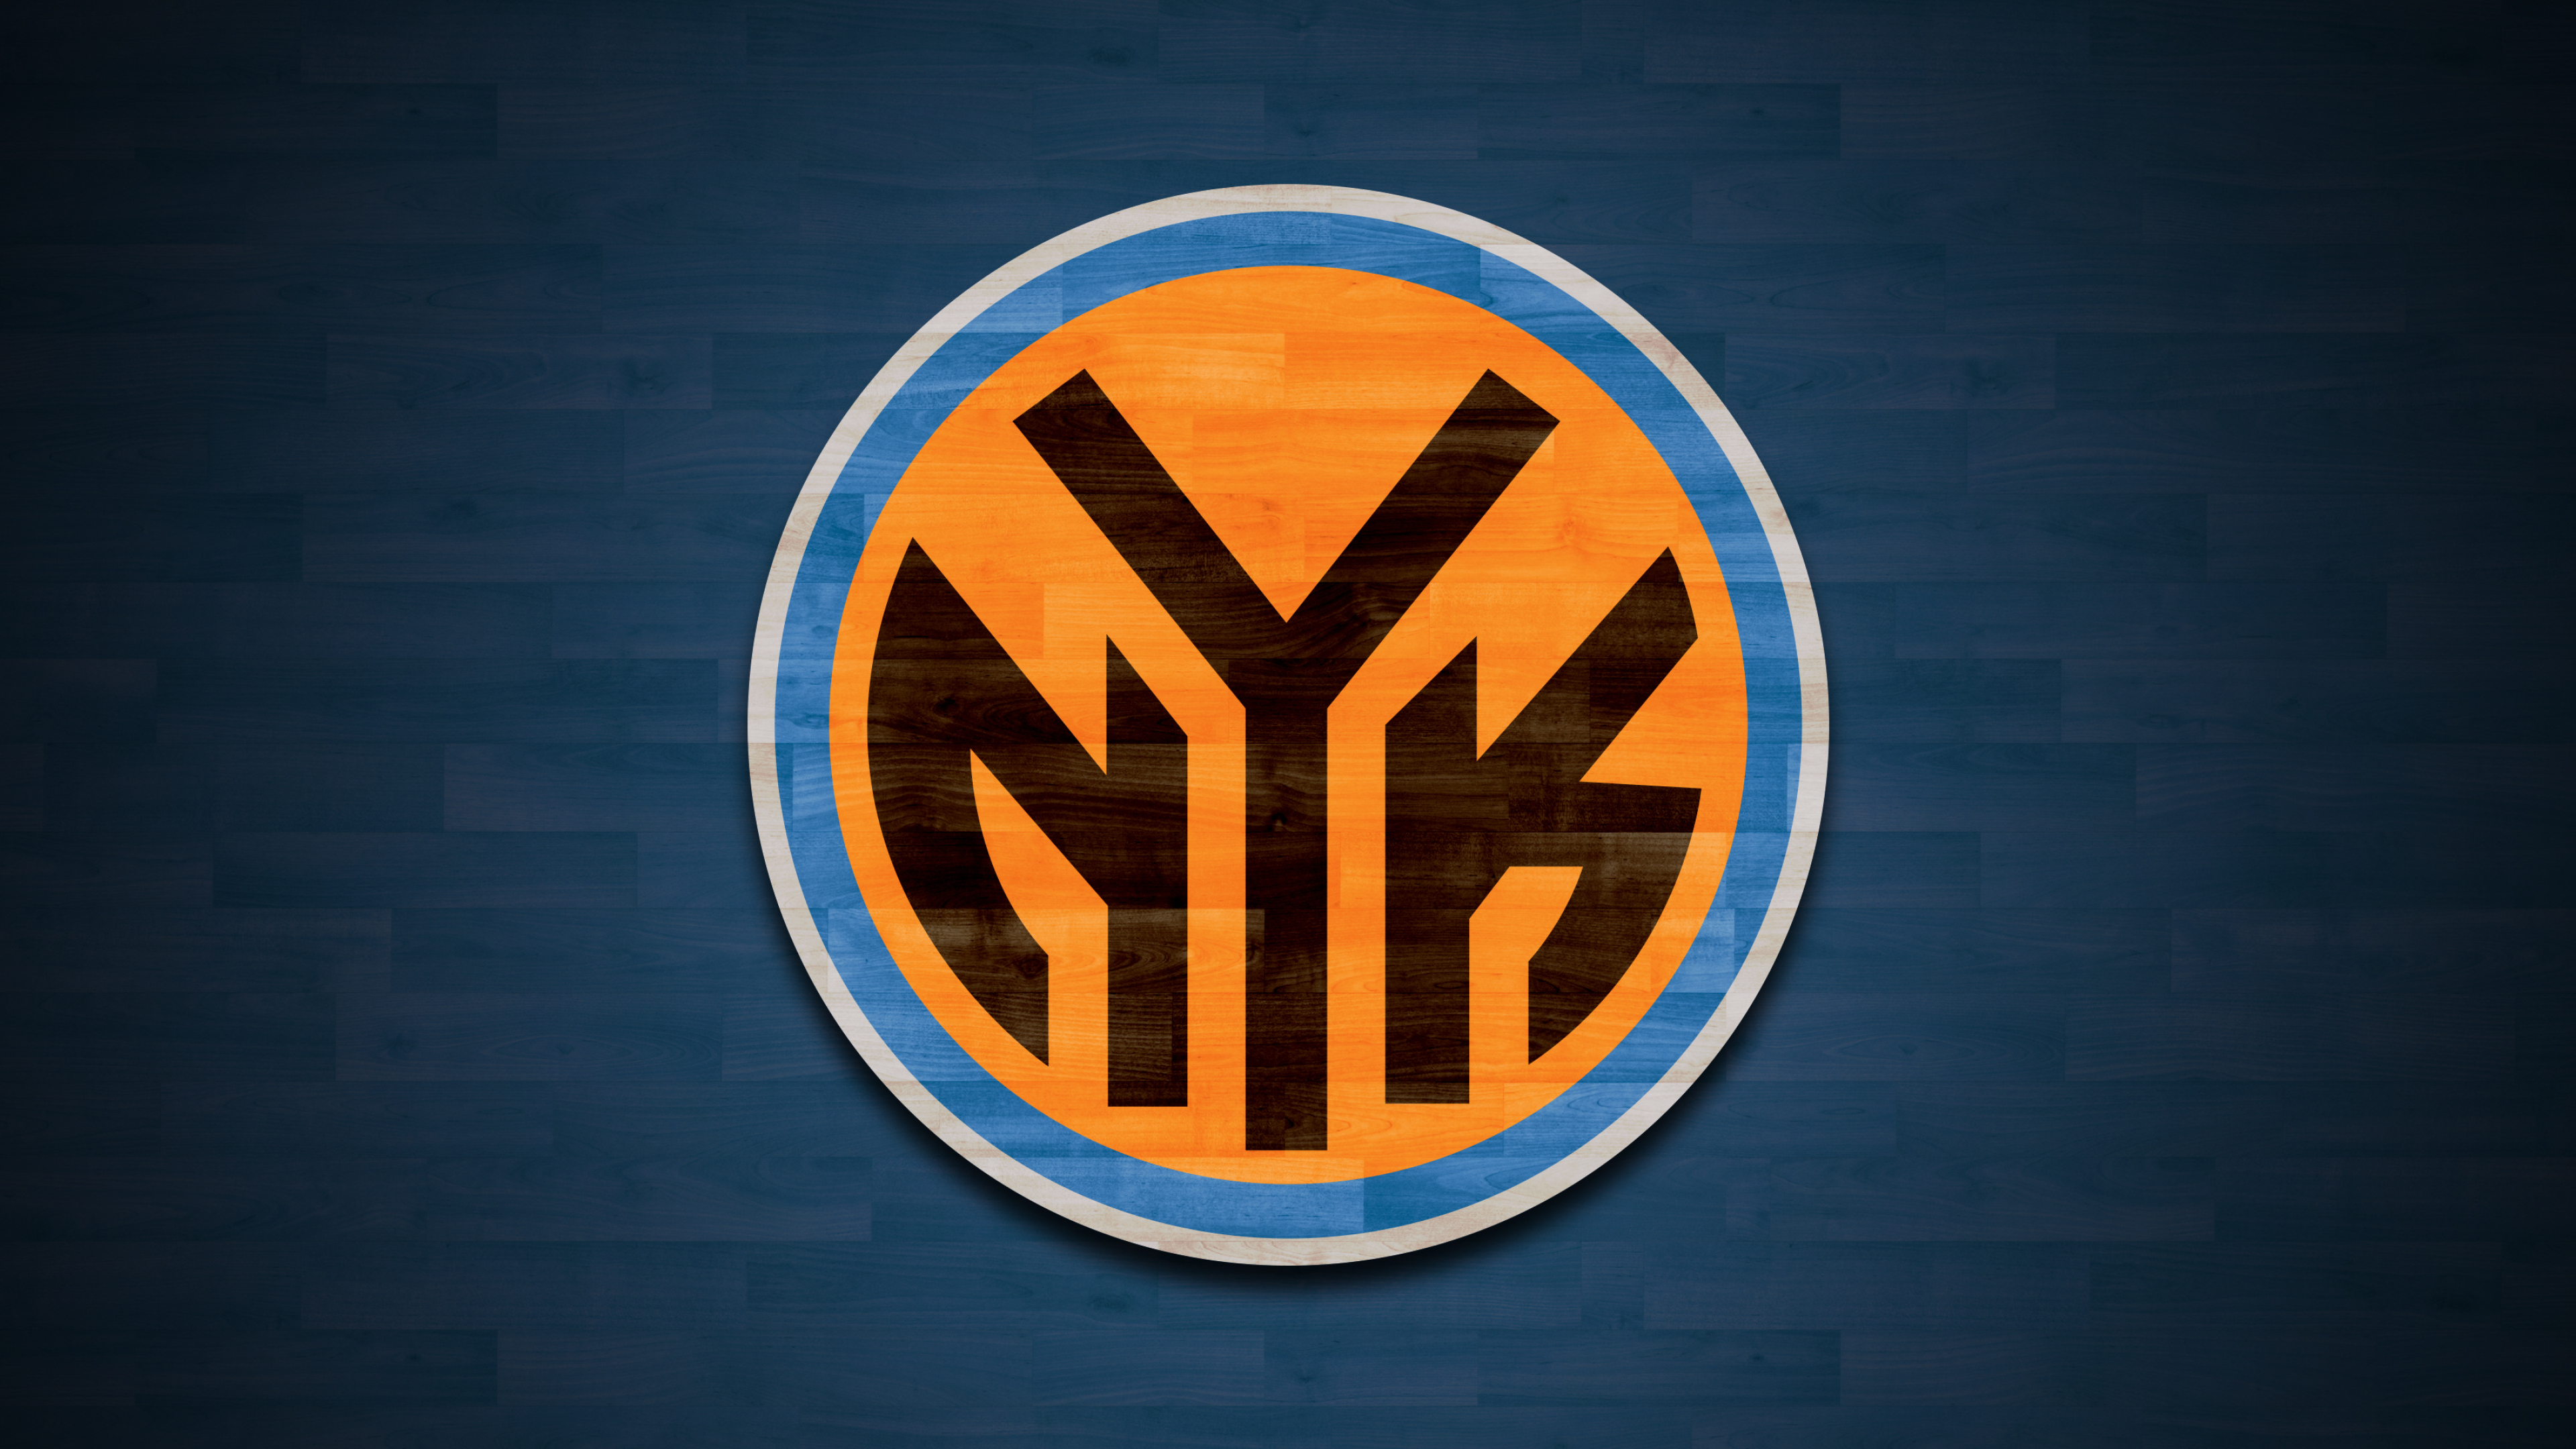 HD wallpaper, New York Knicks, Desktop 4K New York Knicks Wallpaper Image, Background Image, 4K Ultra Hd Wallpaper, 3840X2160 4K Desktop